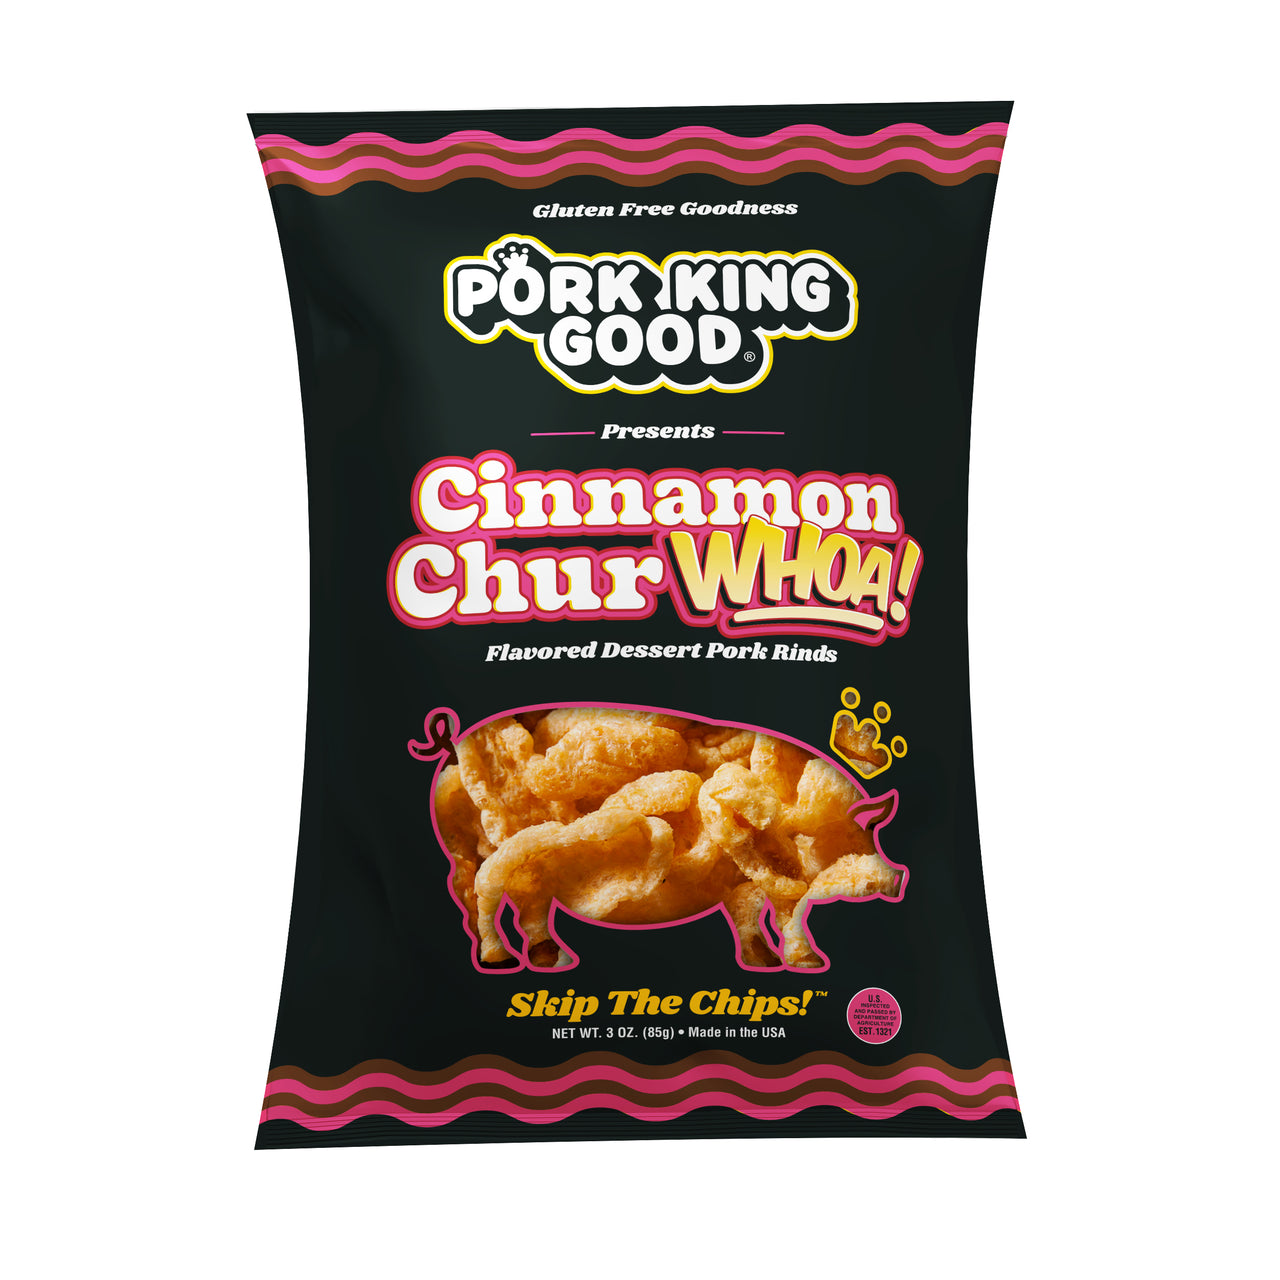 Pork King Good Cinnamon ChurWHOA Pork Rinds - 3 oz